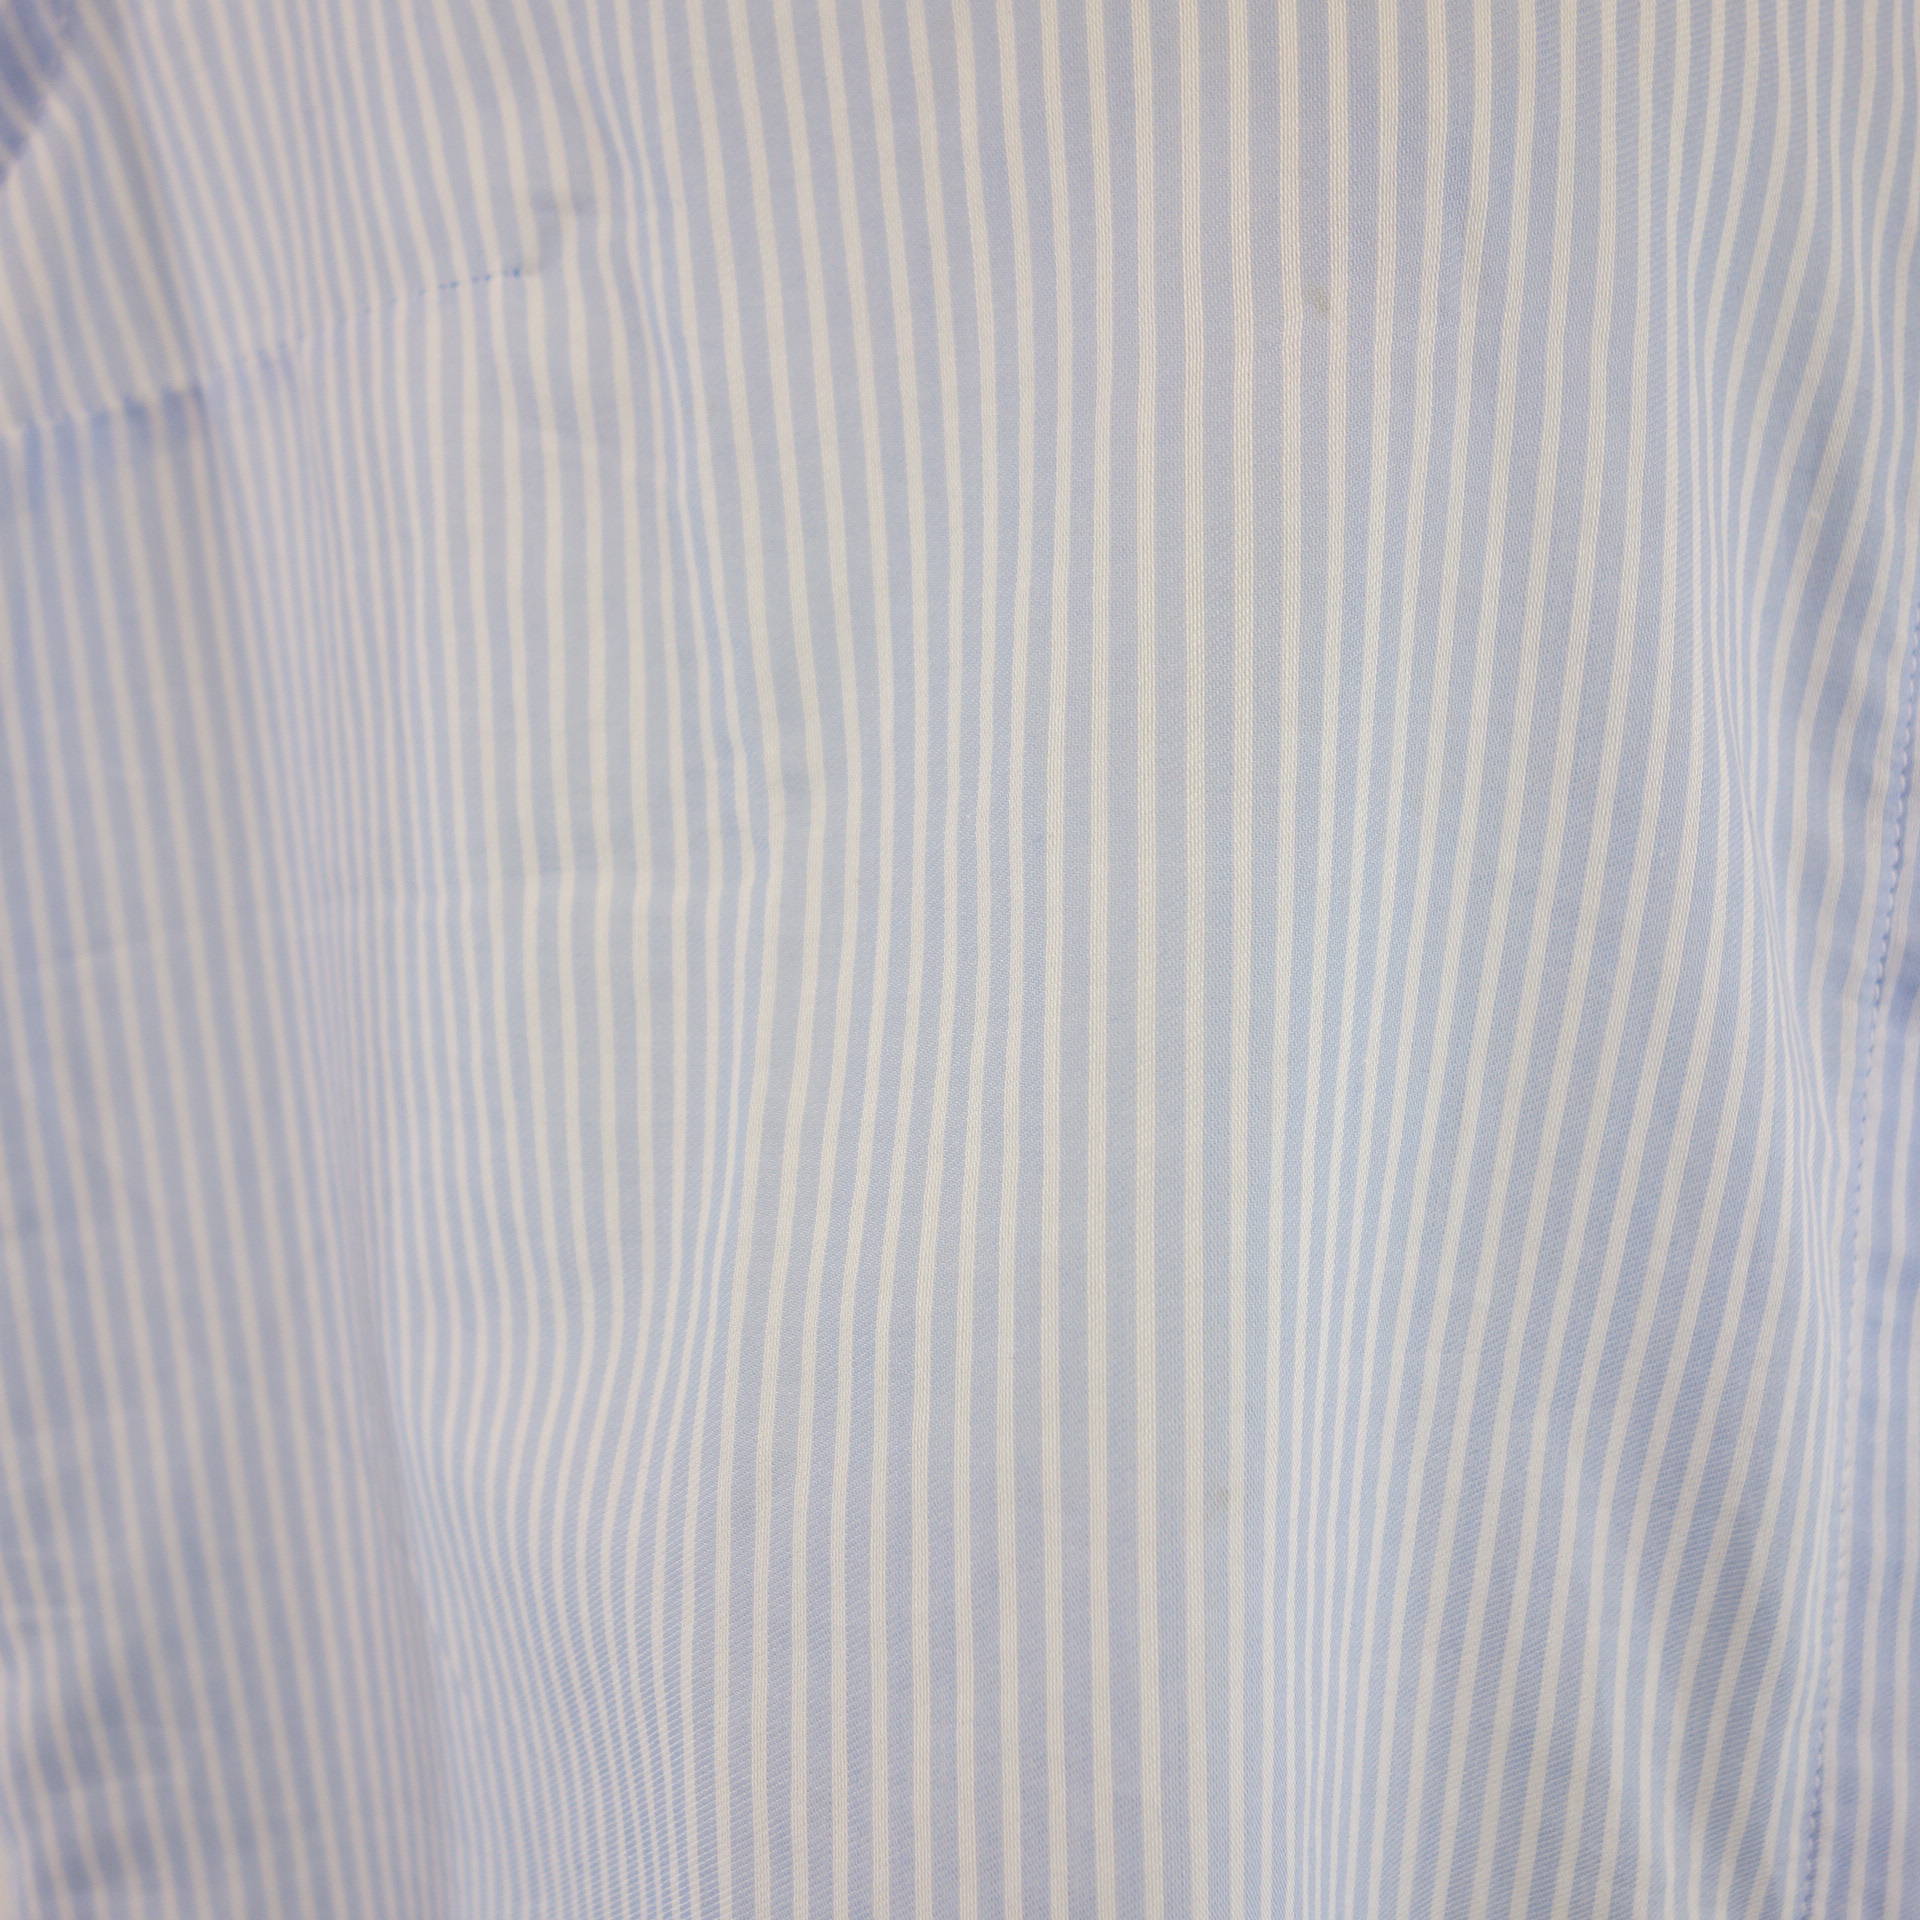 ACNE STUDIOS Damen Bluse Tunika Shirt Oberteil Hemd Hemdbluse Blau Weiß Größe 40